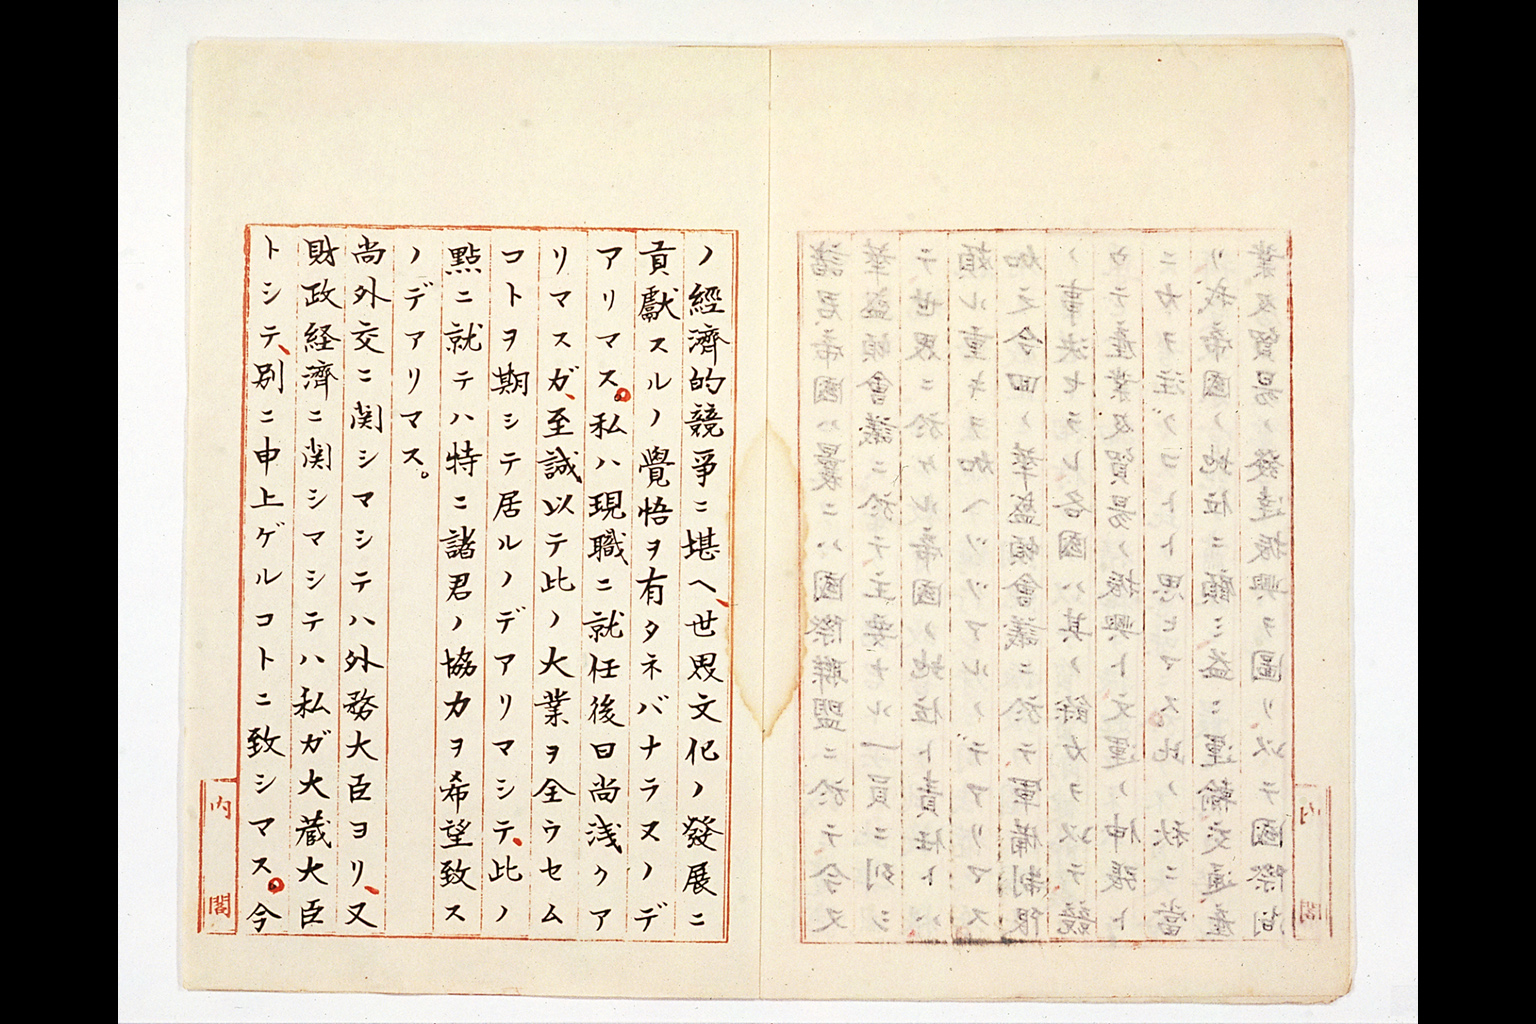 Manuscript of Prime Minister's Inaugural Speech(larger)